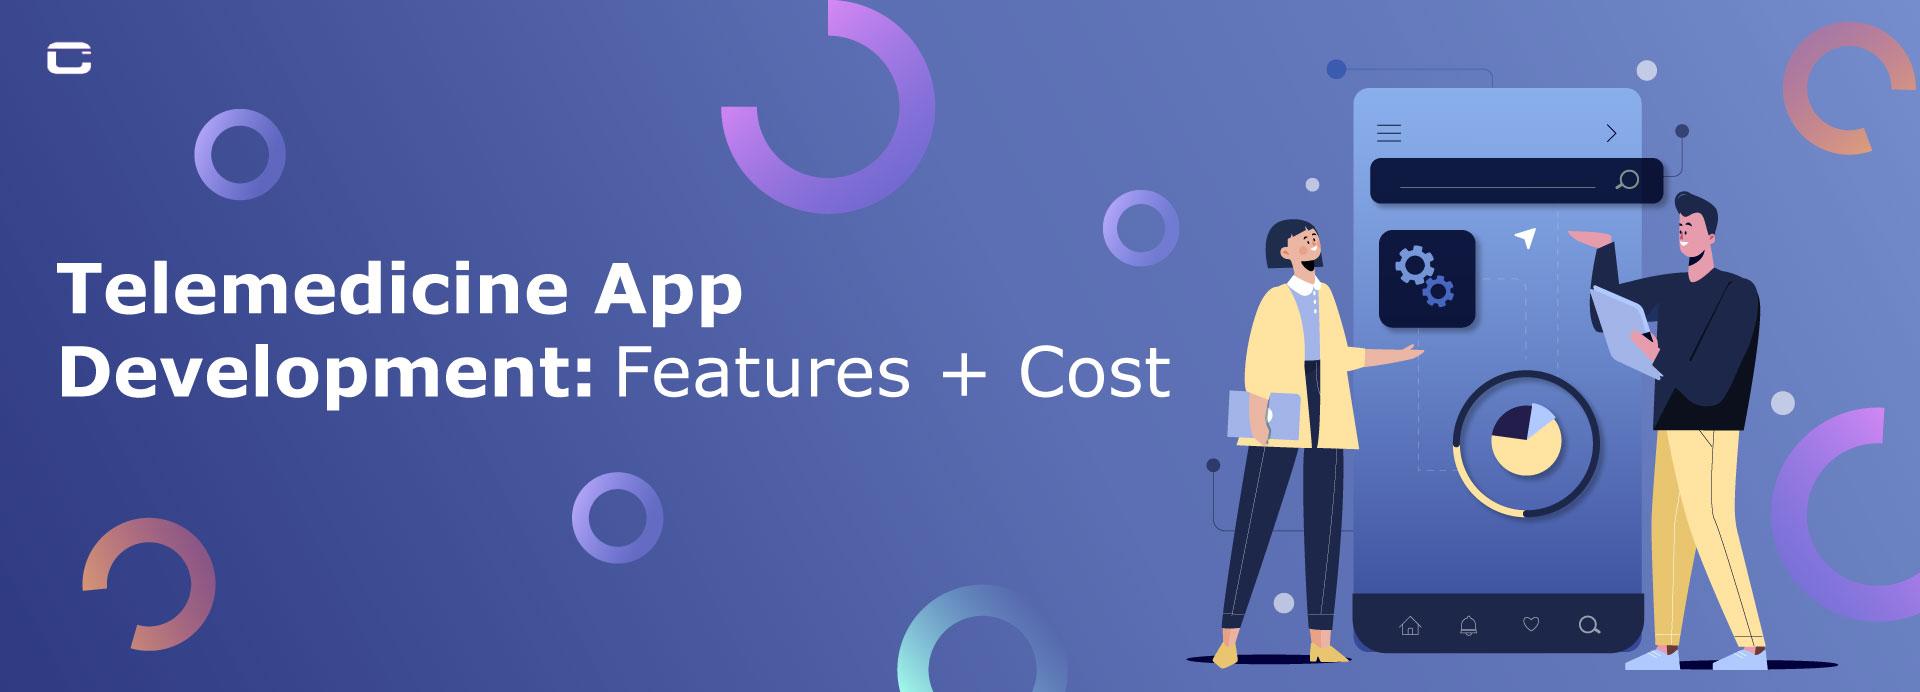 Telemedicine App Development: Features + Cost